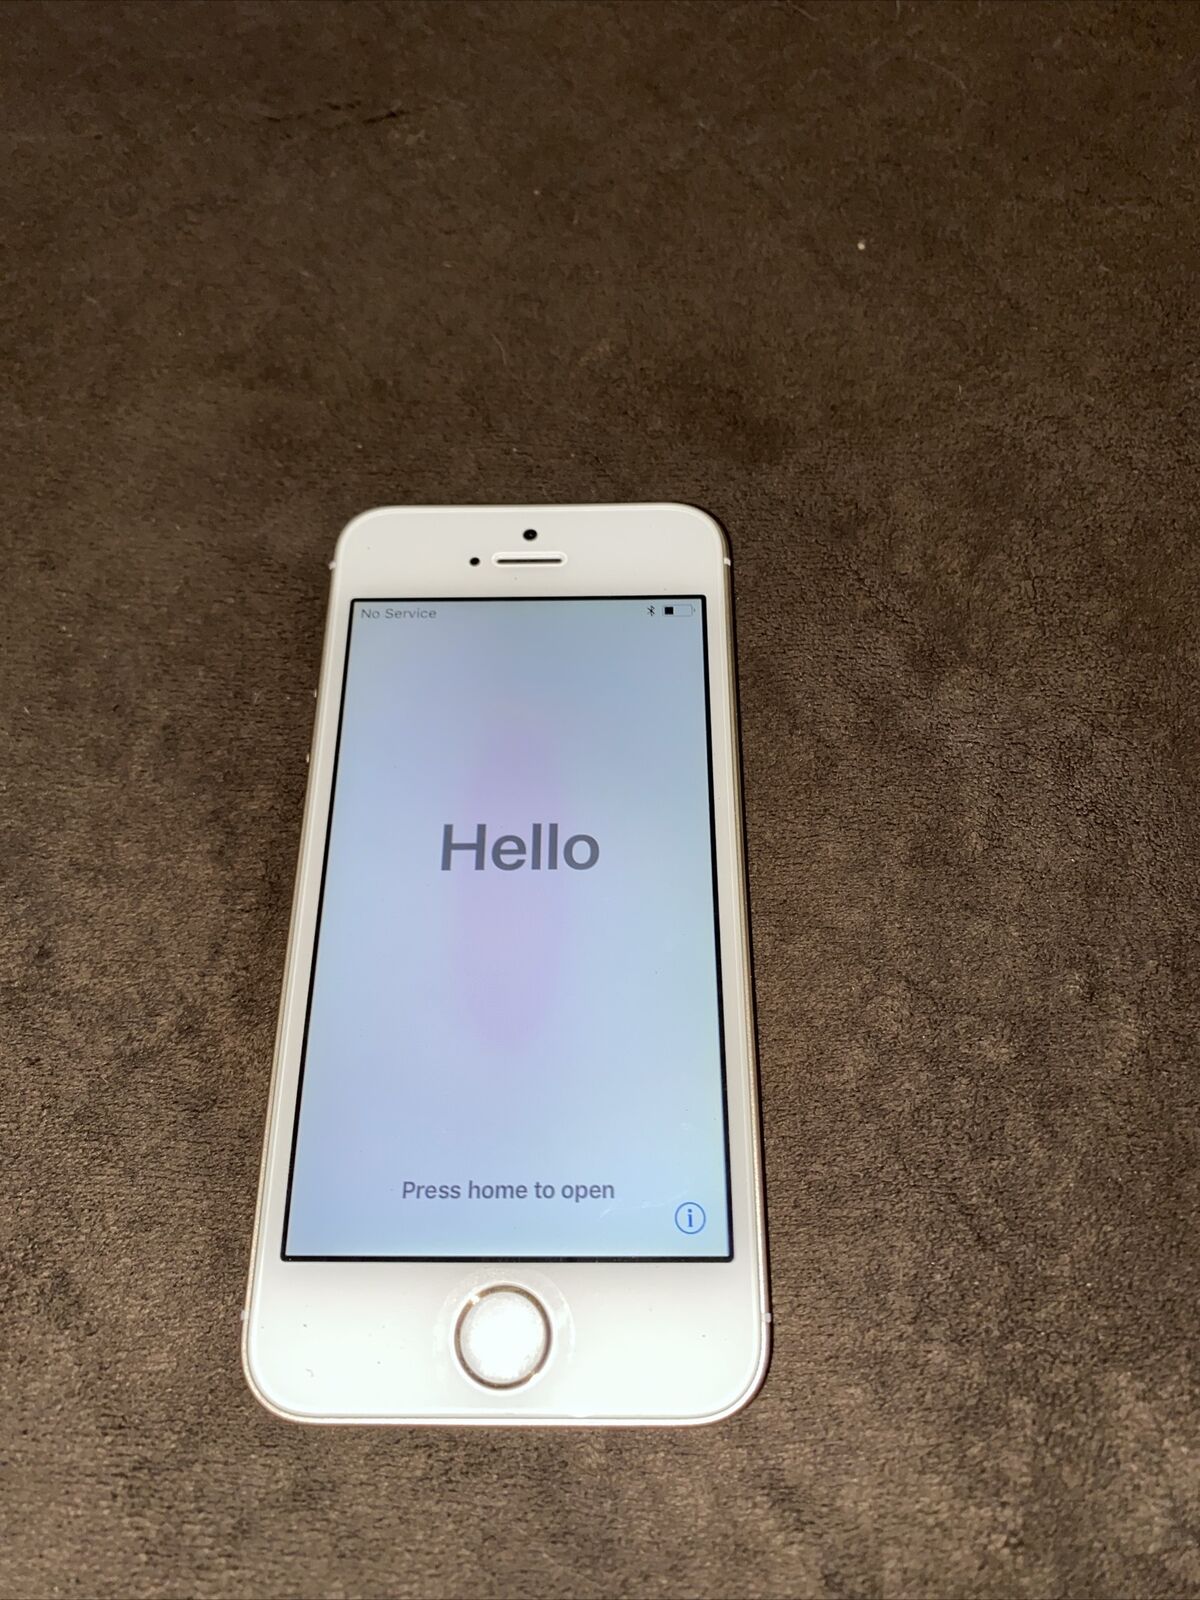 Apple iPhone 5s - 16GB - Gold (Unlocked) A1533 (CDMA + GSM)